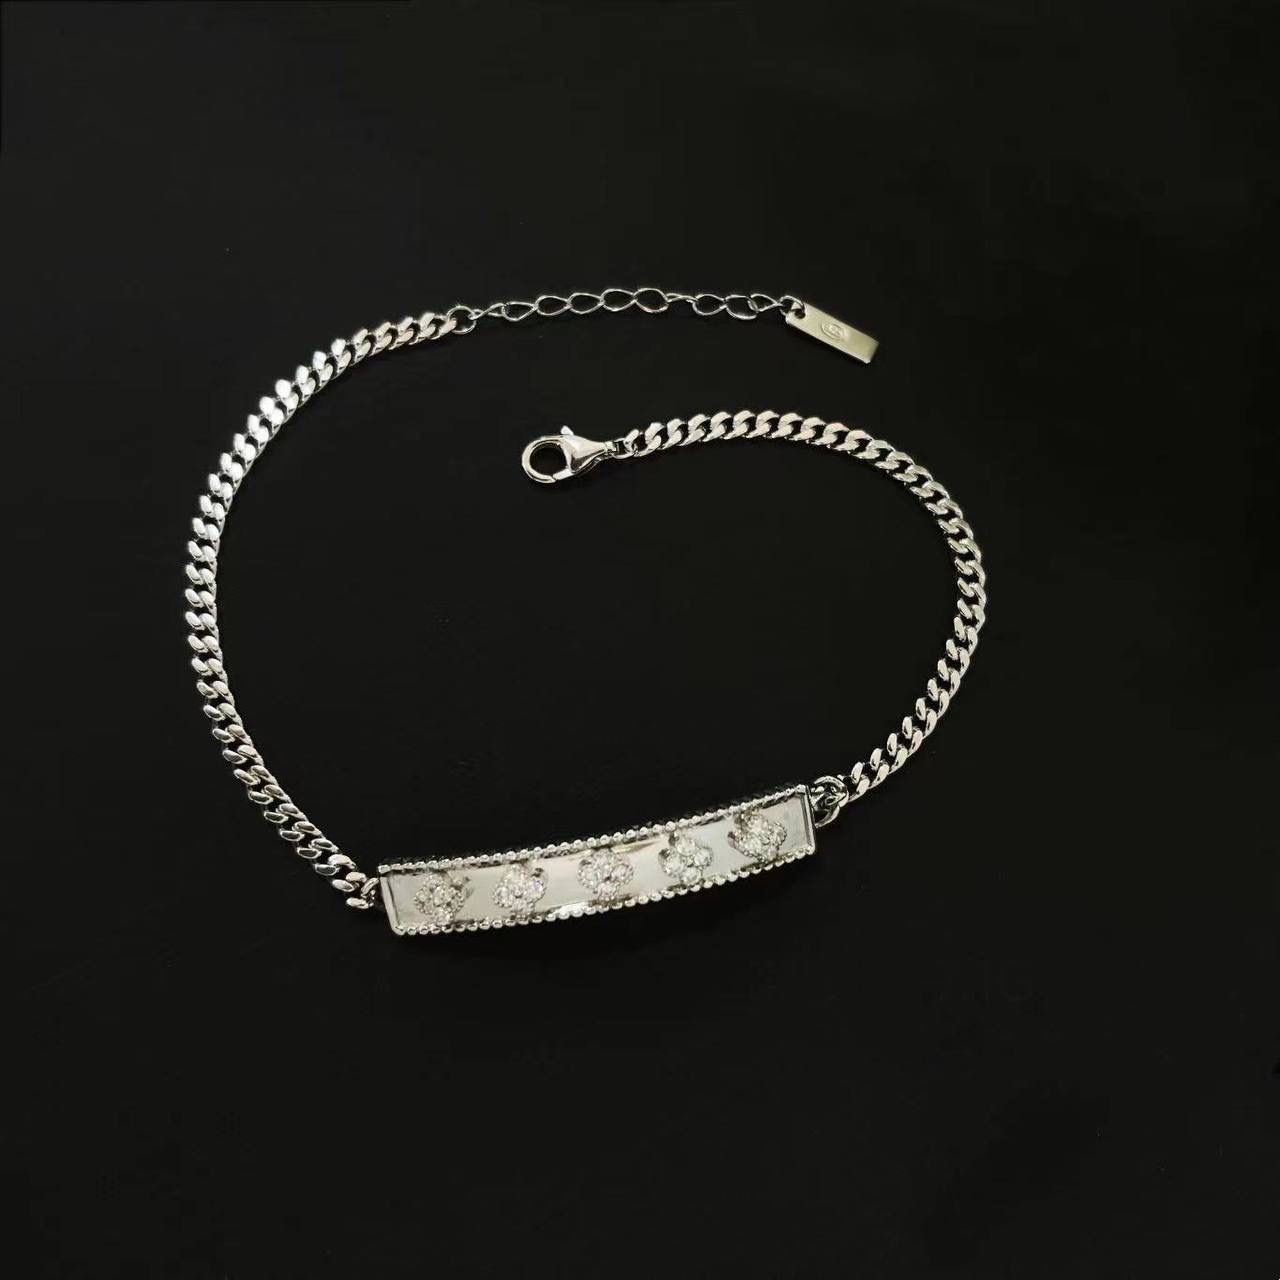 Elegant Silver 925 Bracelet Studded With Sparkling Zircon Stones